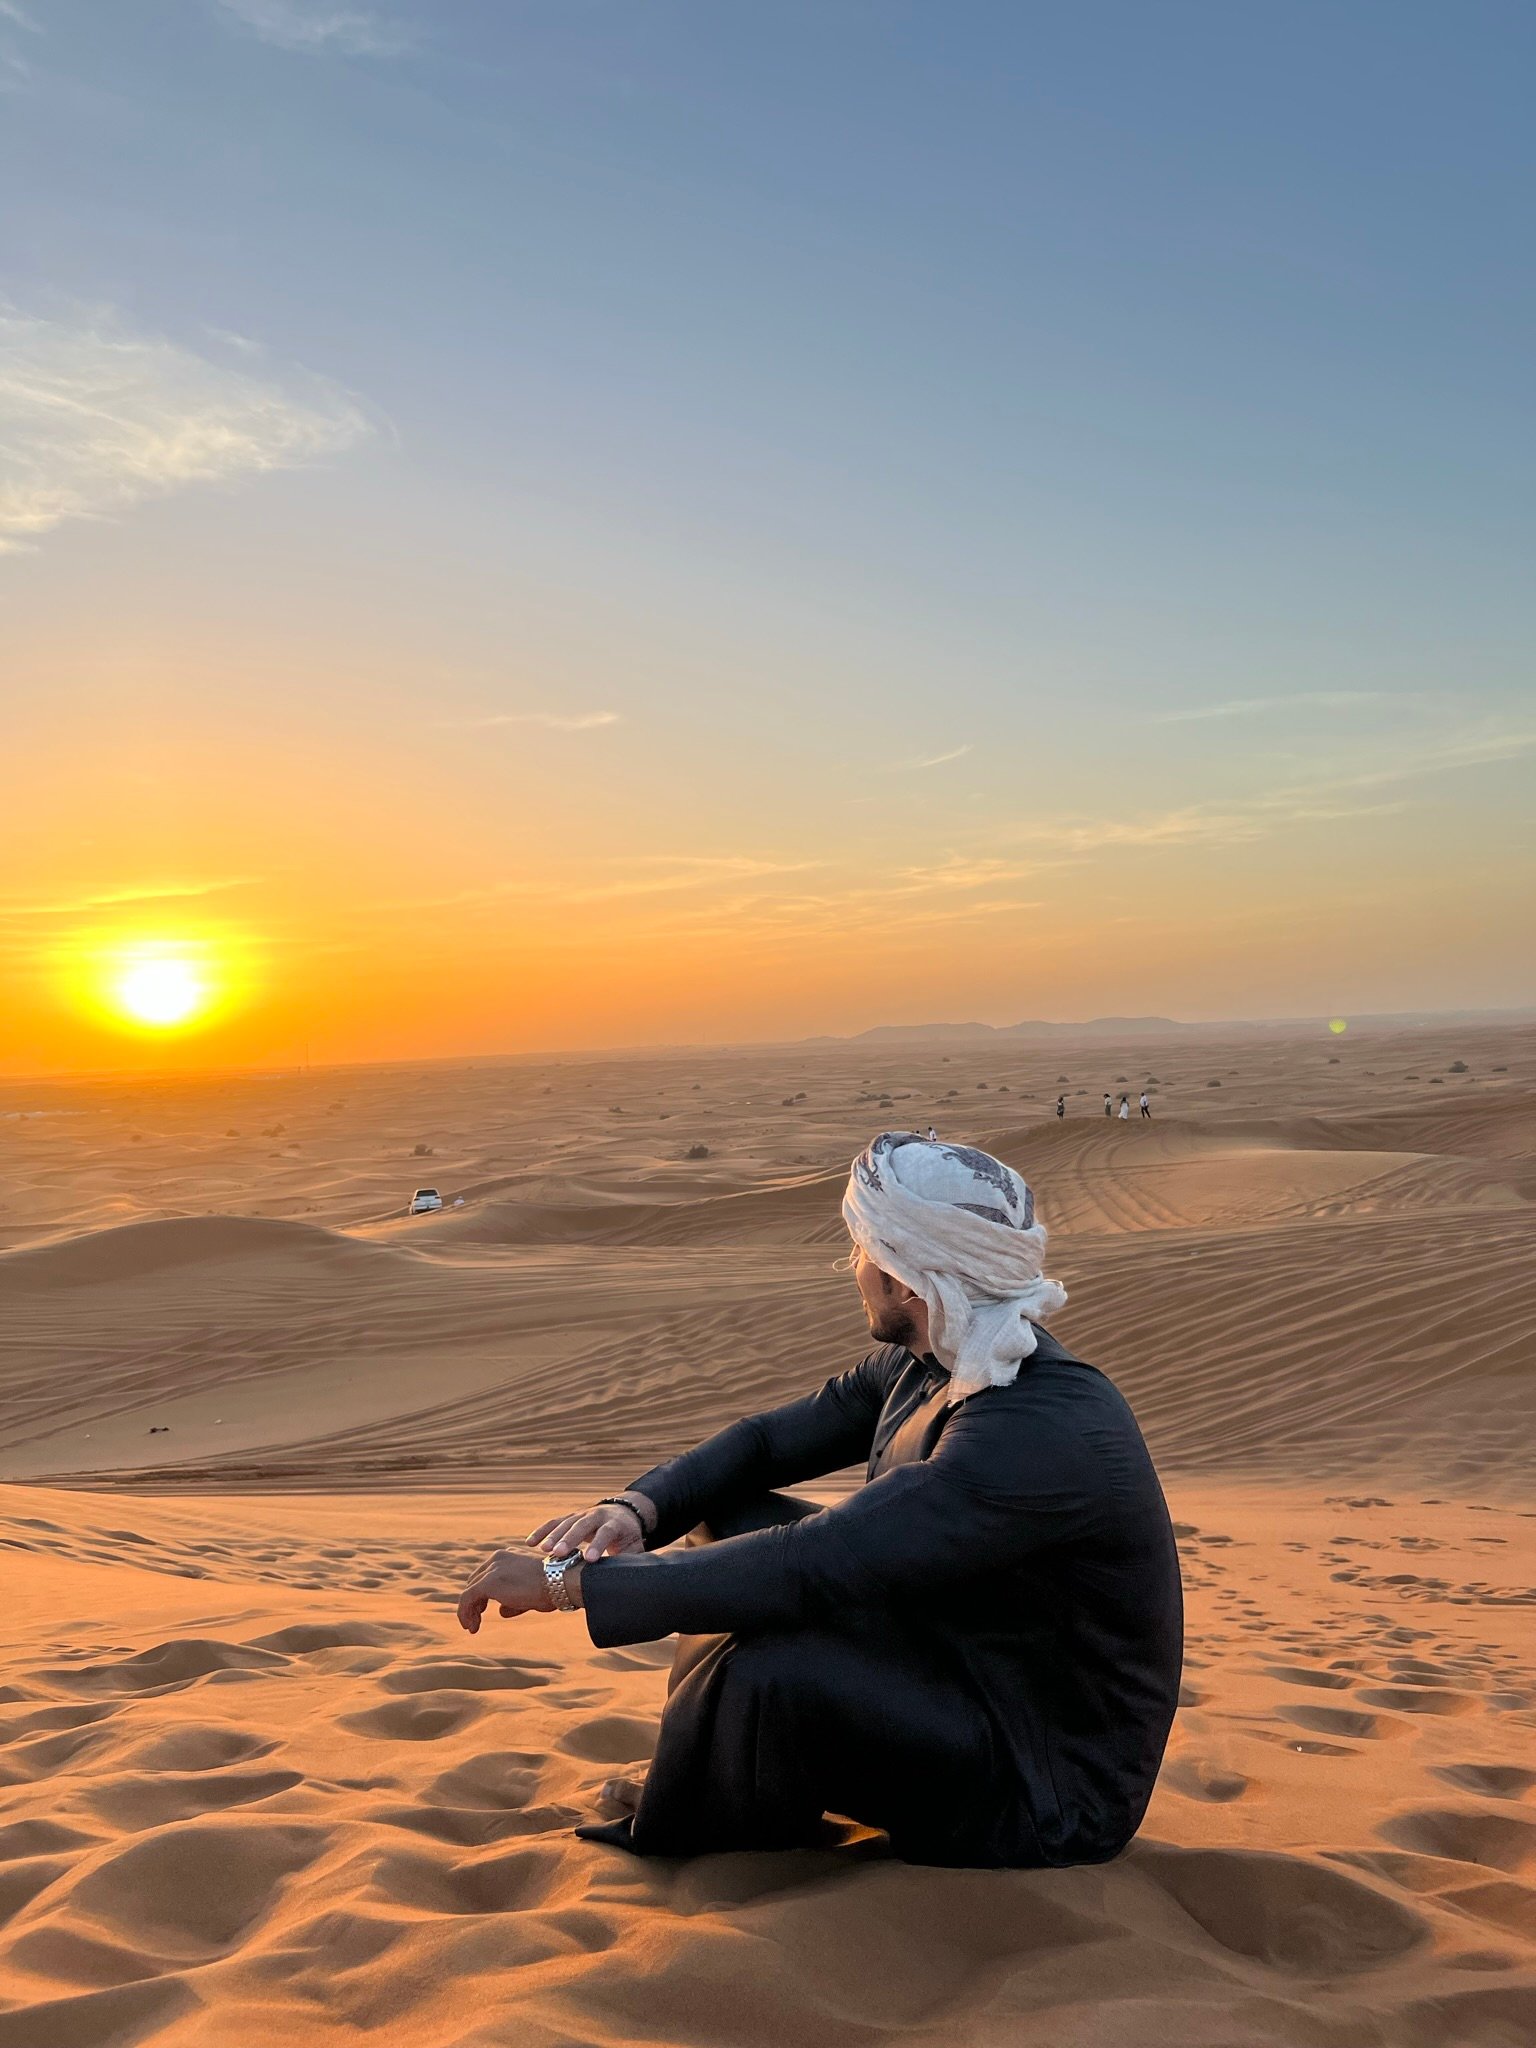 Desert Safari Dubai, book your desert safari ride in Dubai with Hakoom Travels